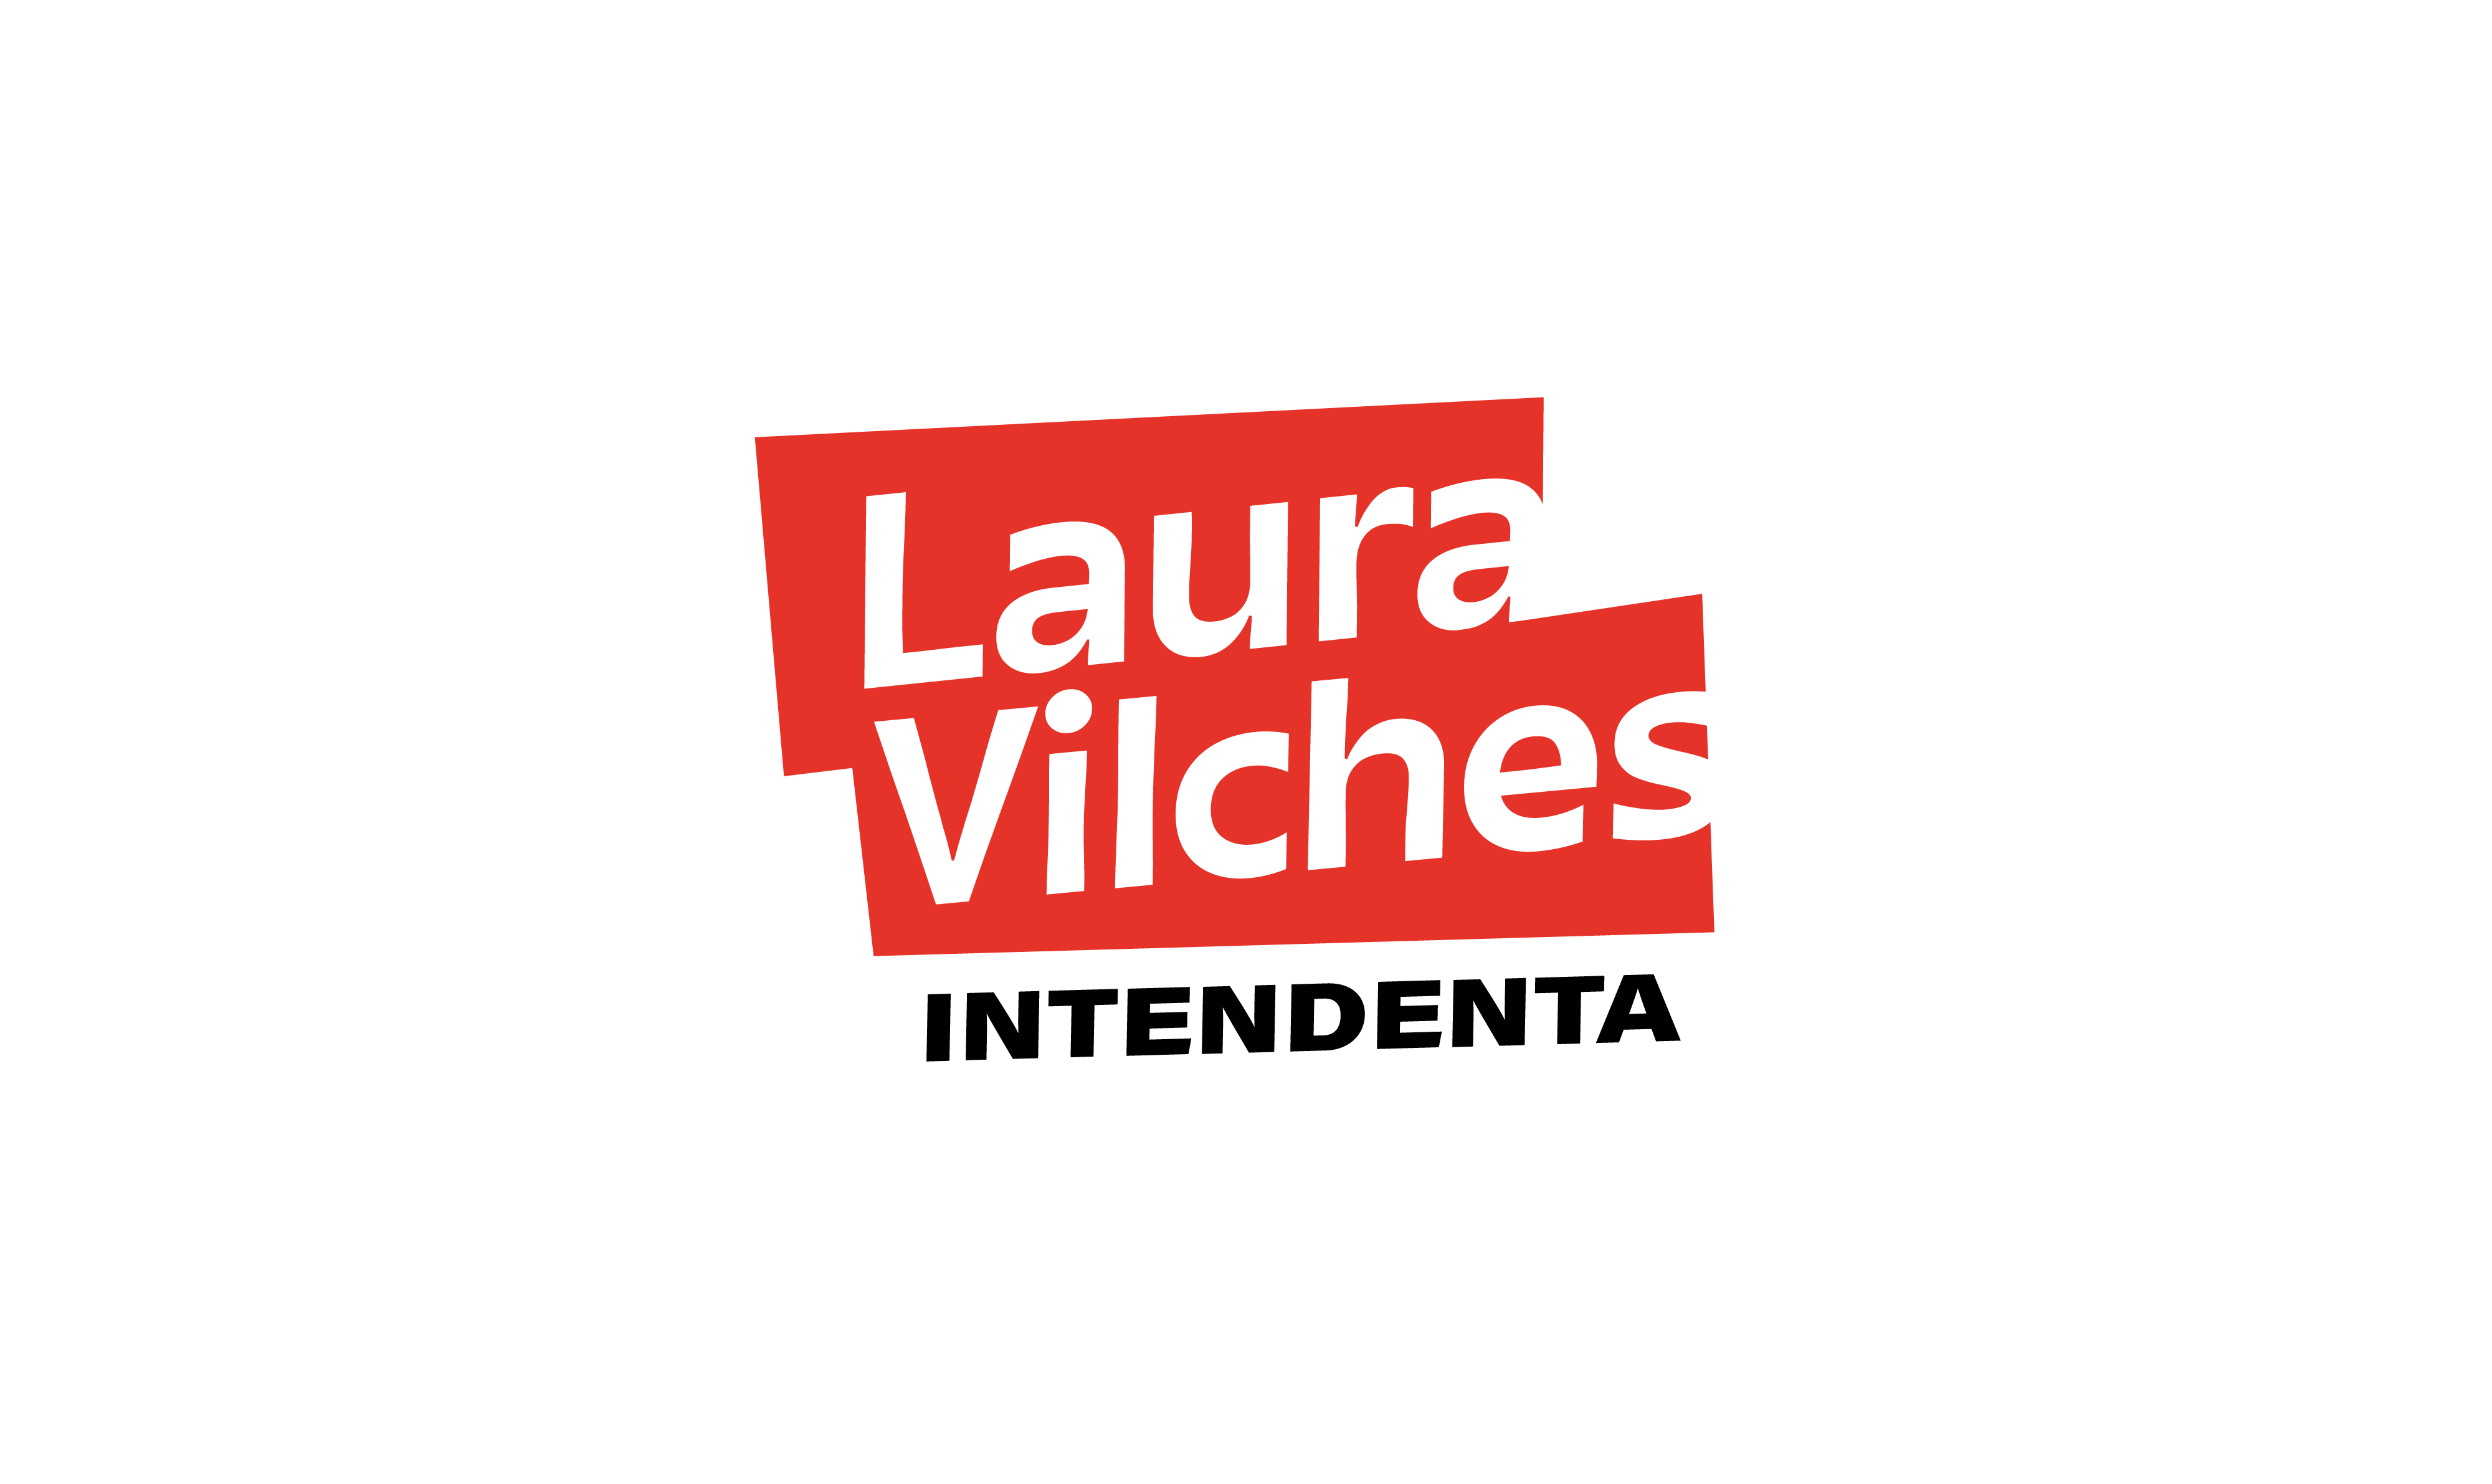 Laura Vilches